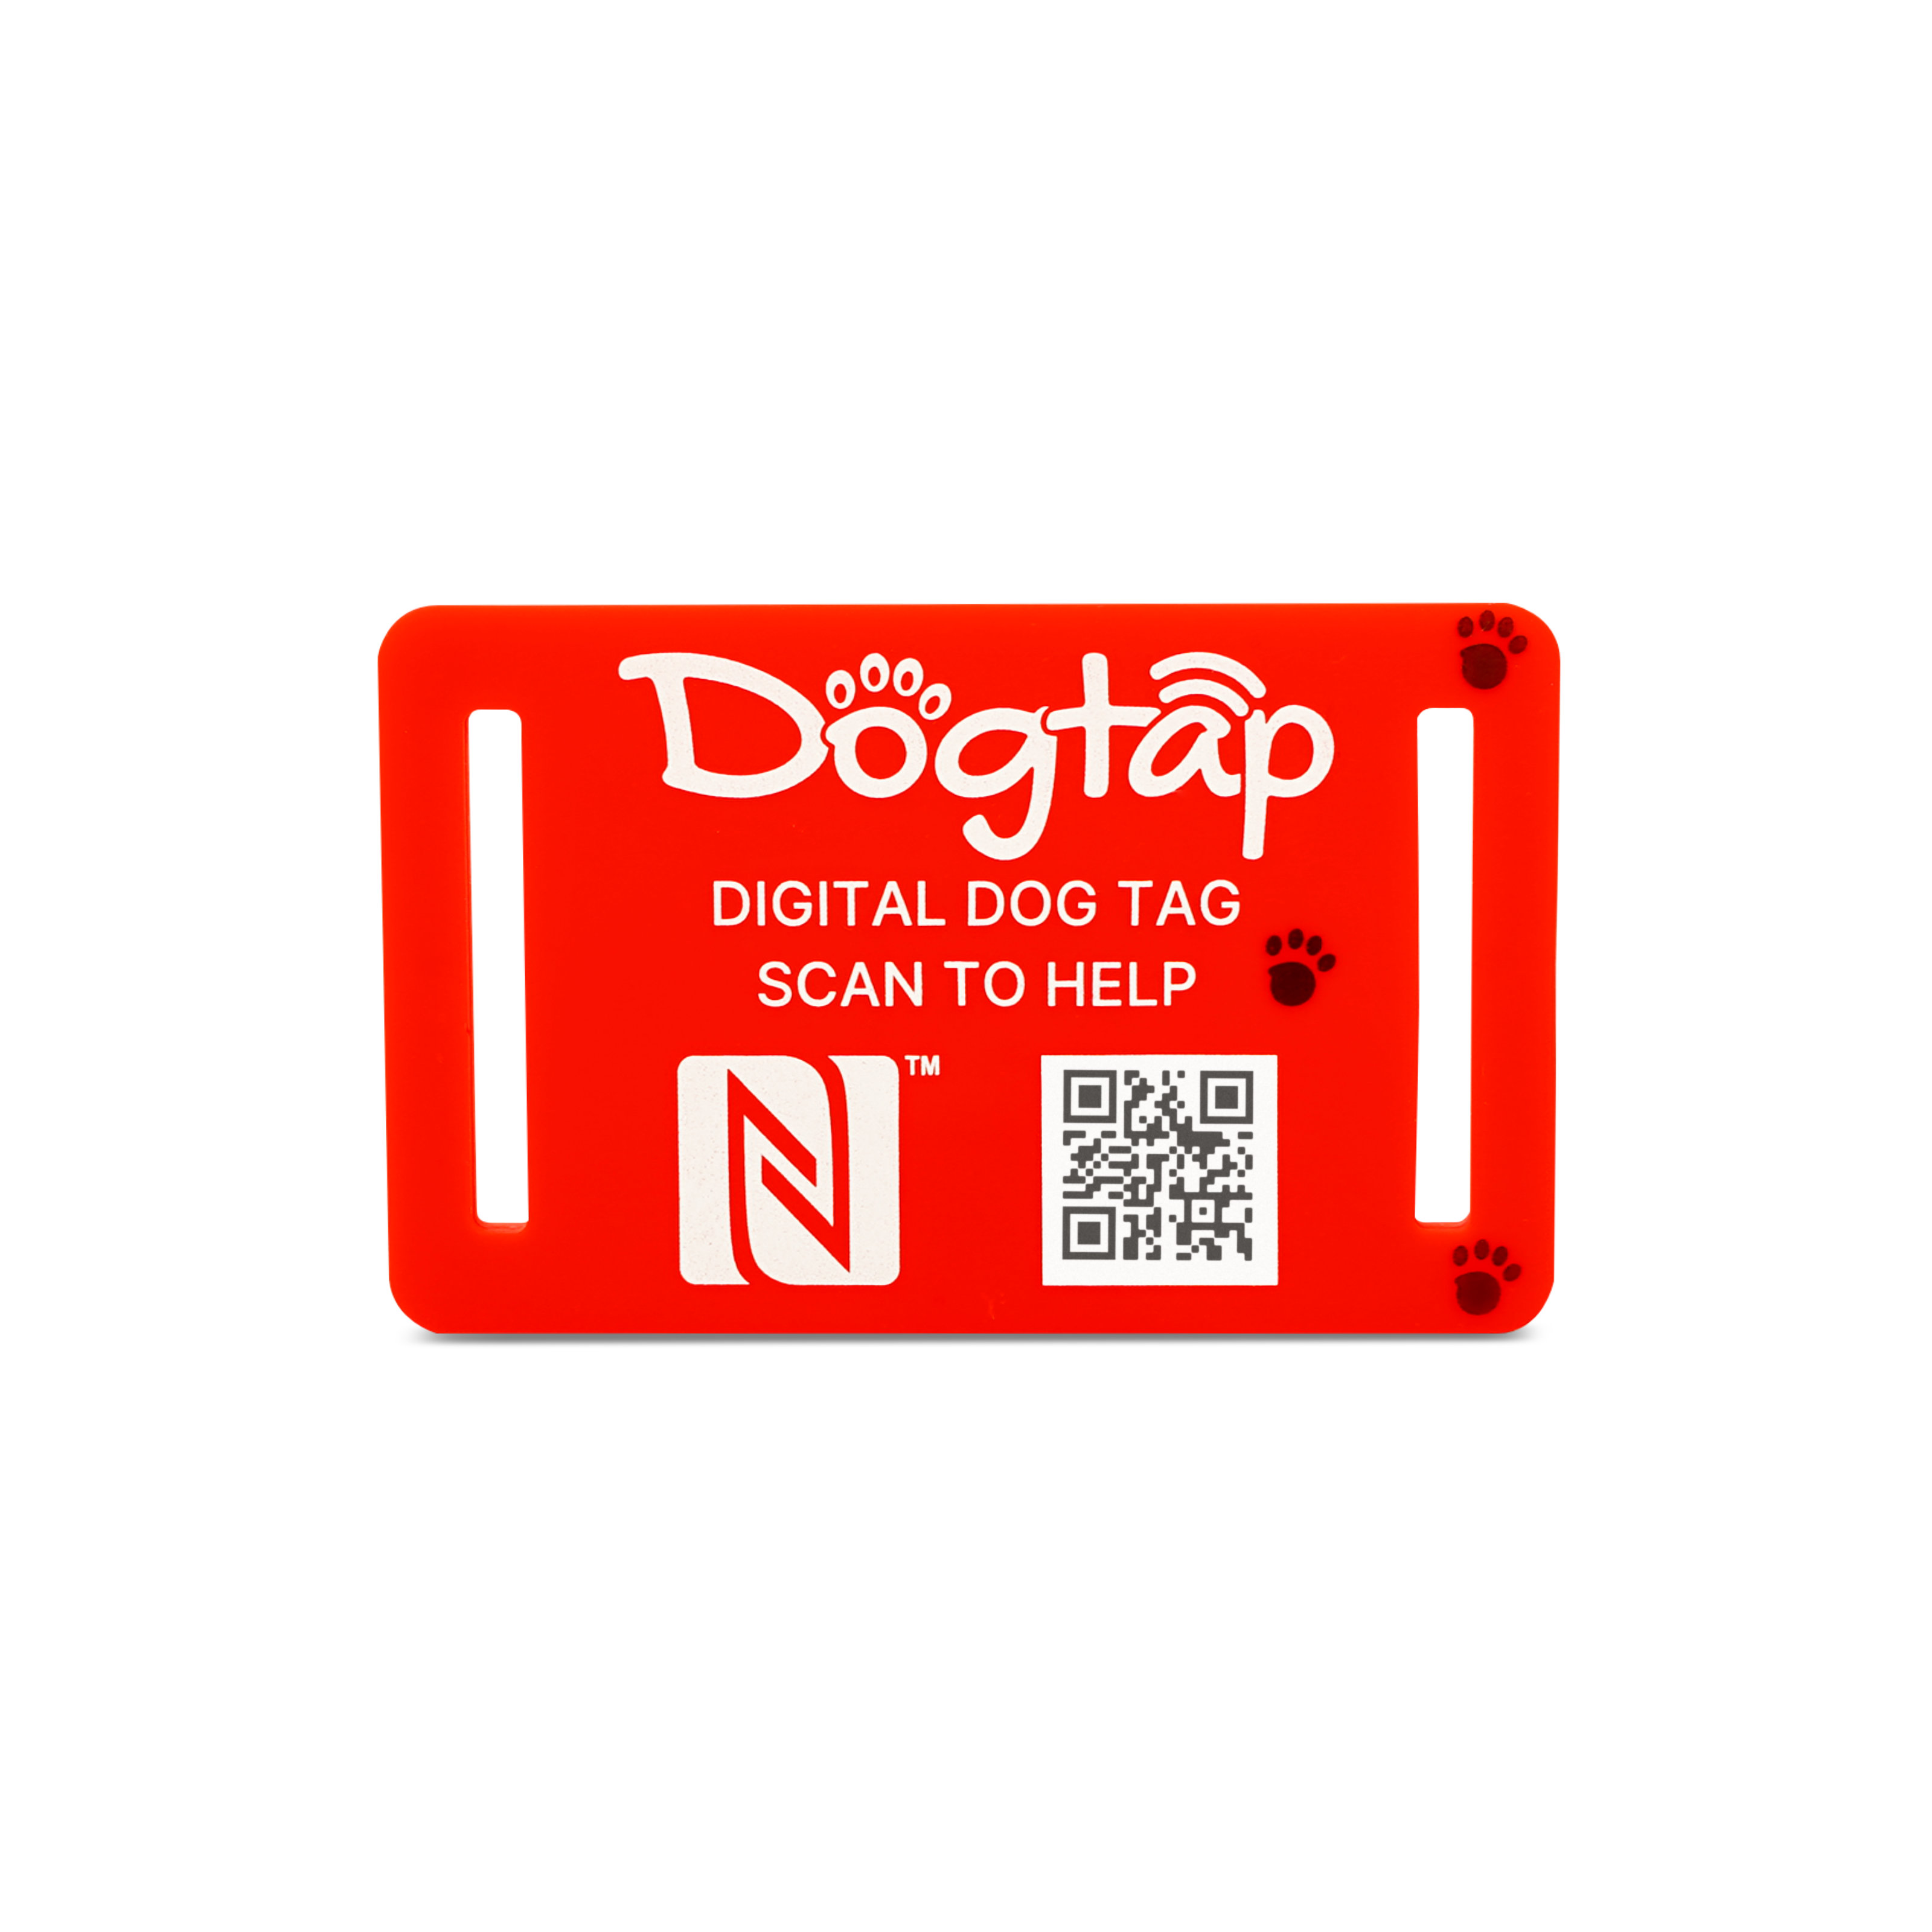 Dogtap Light Big - Digitale Hundemarke - Silikon - 67 x 40 mm - rot